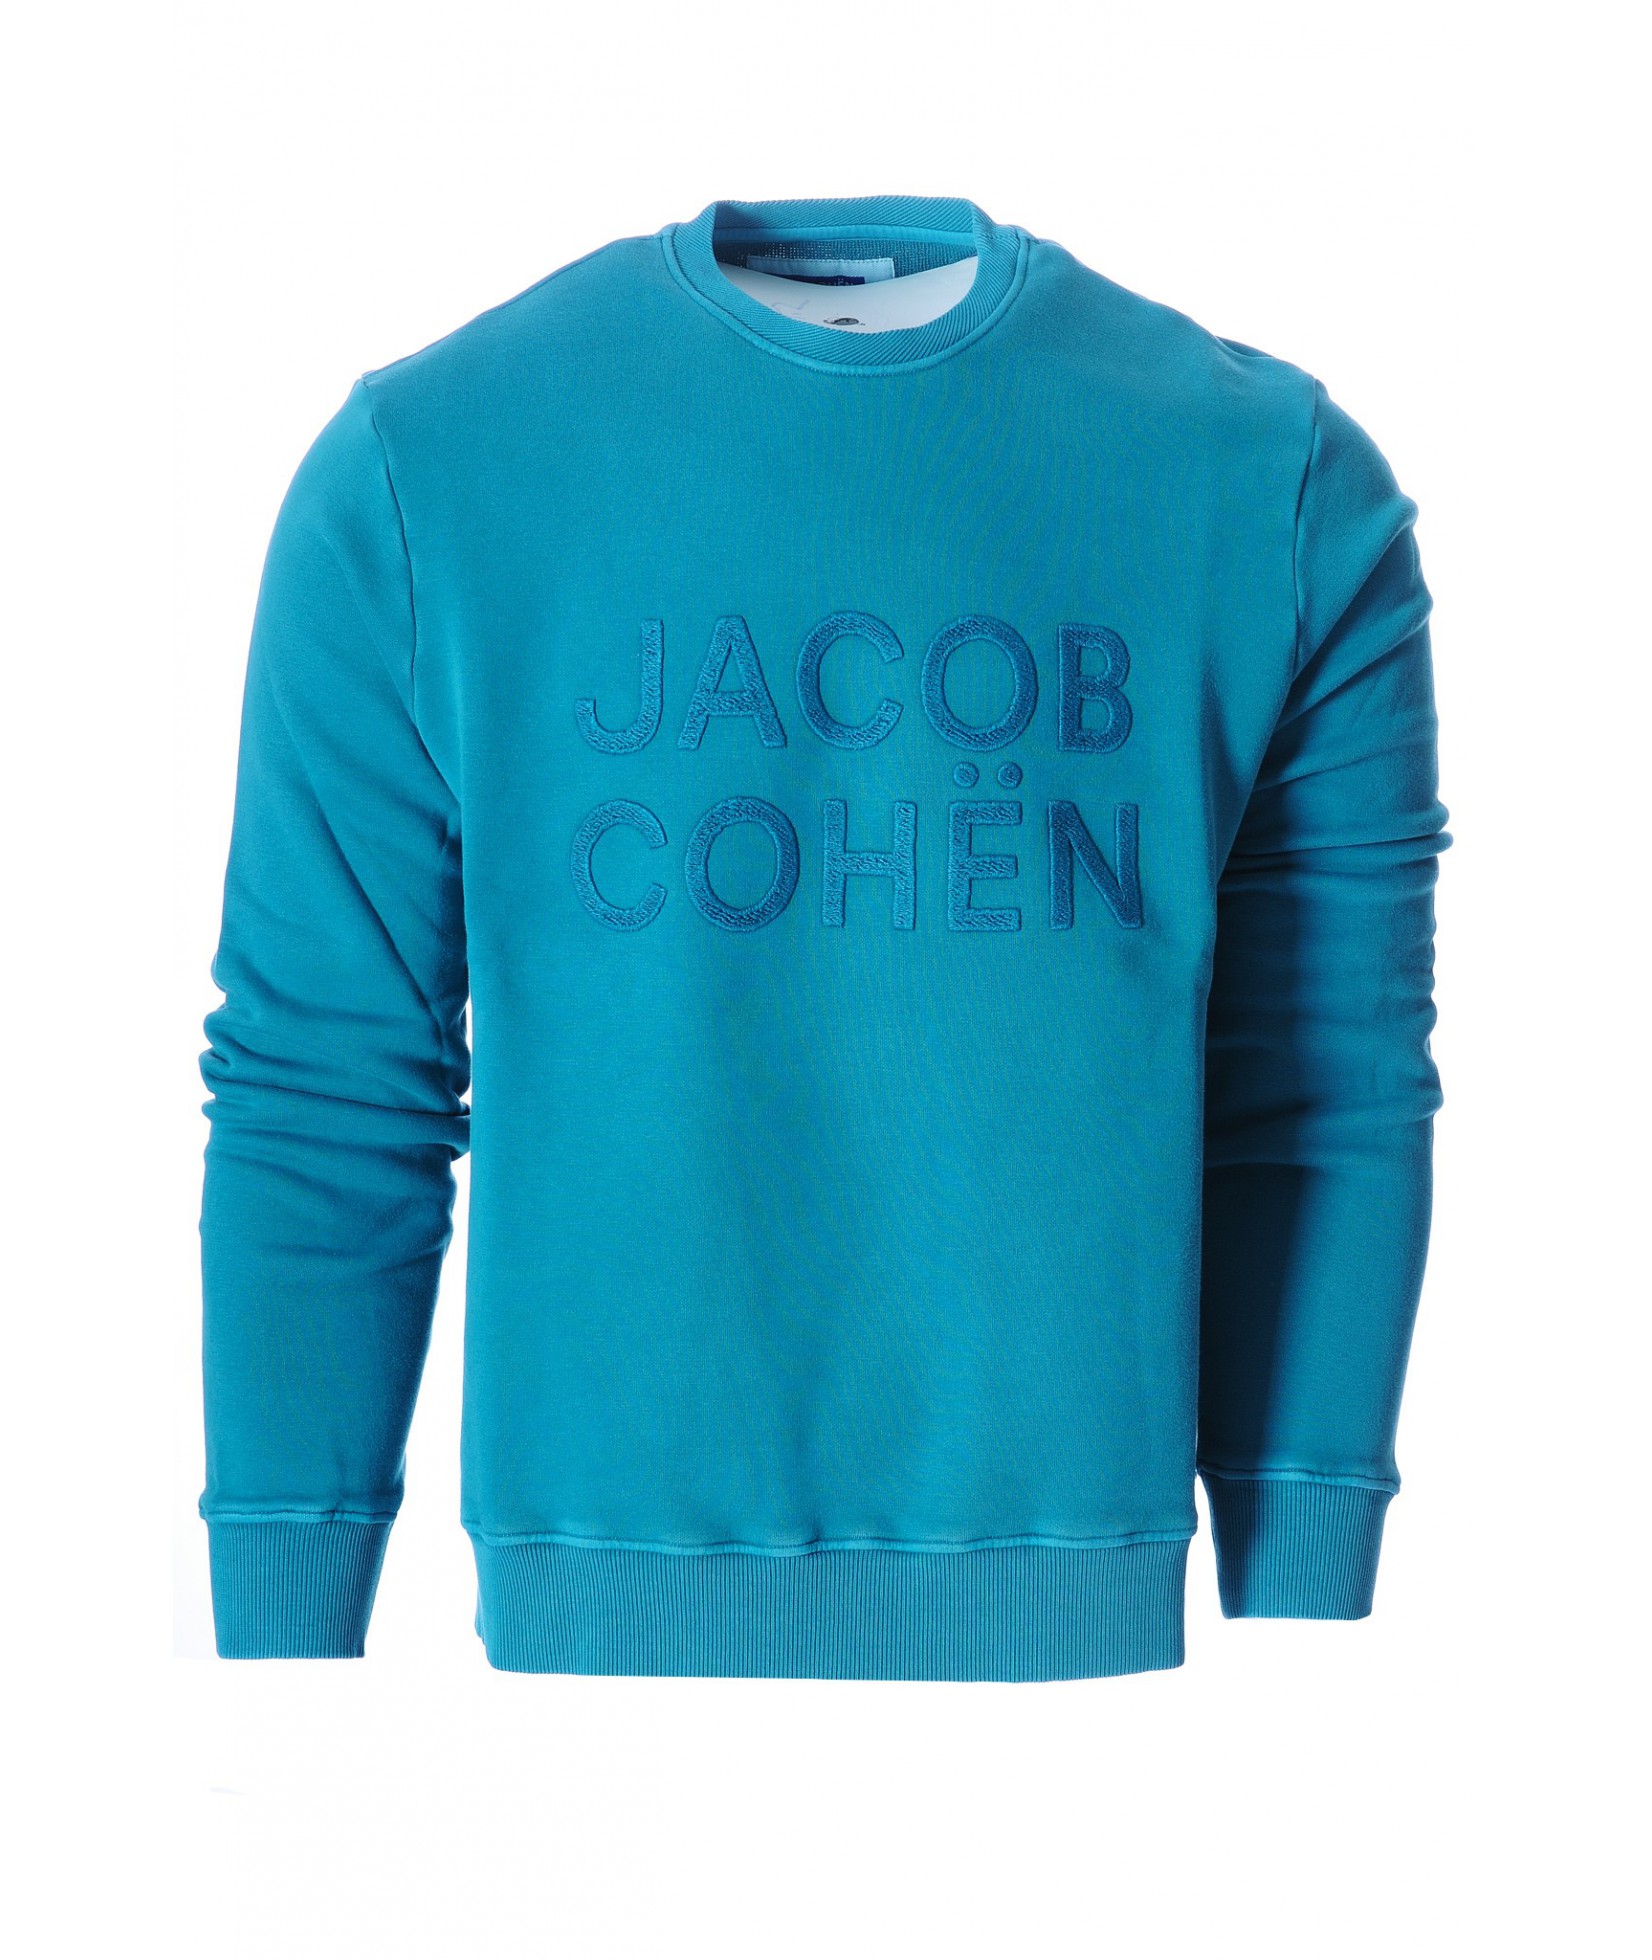 Jacob Cohën sweater (35604)